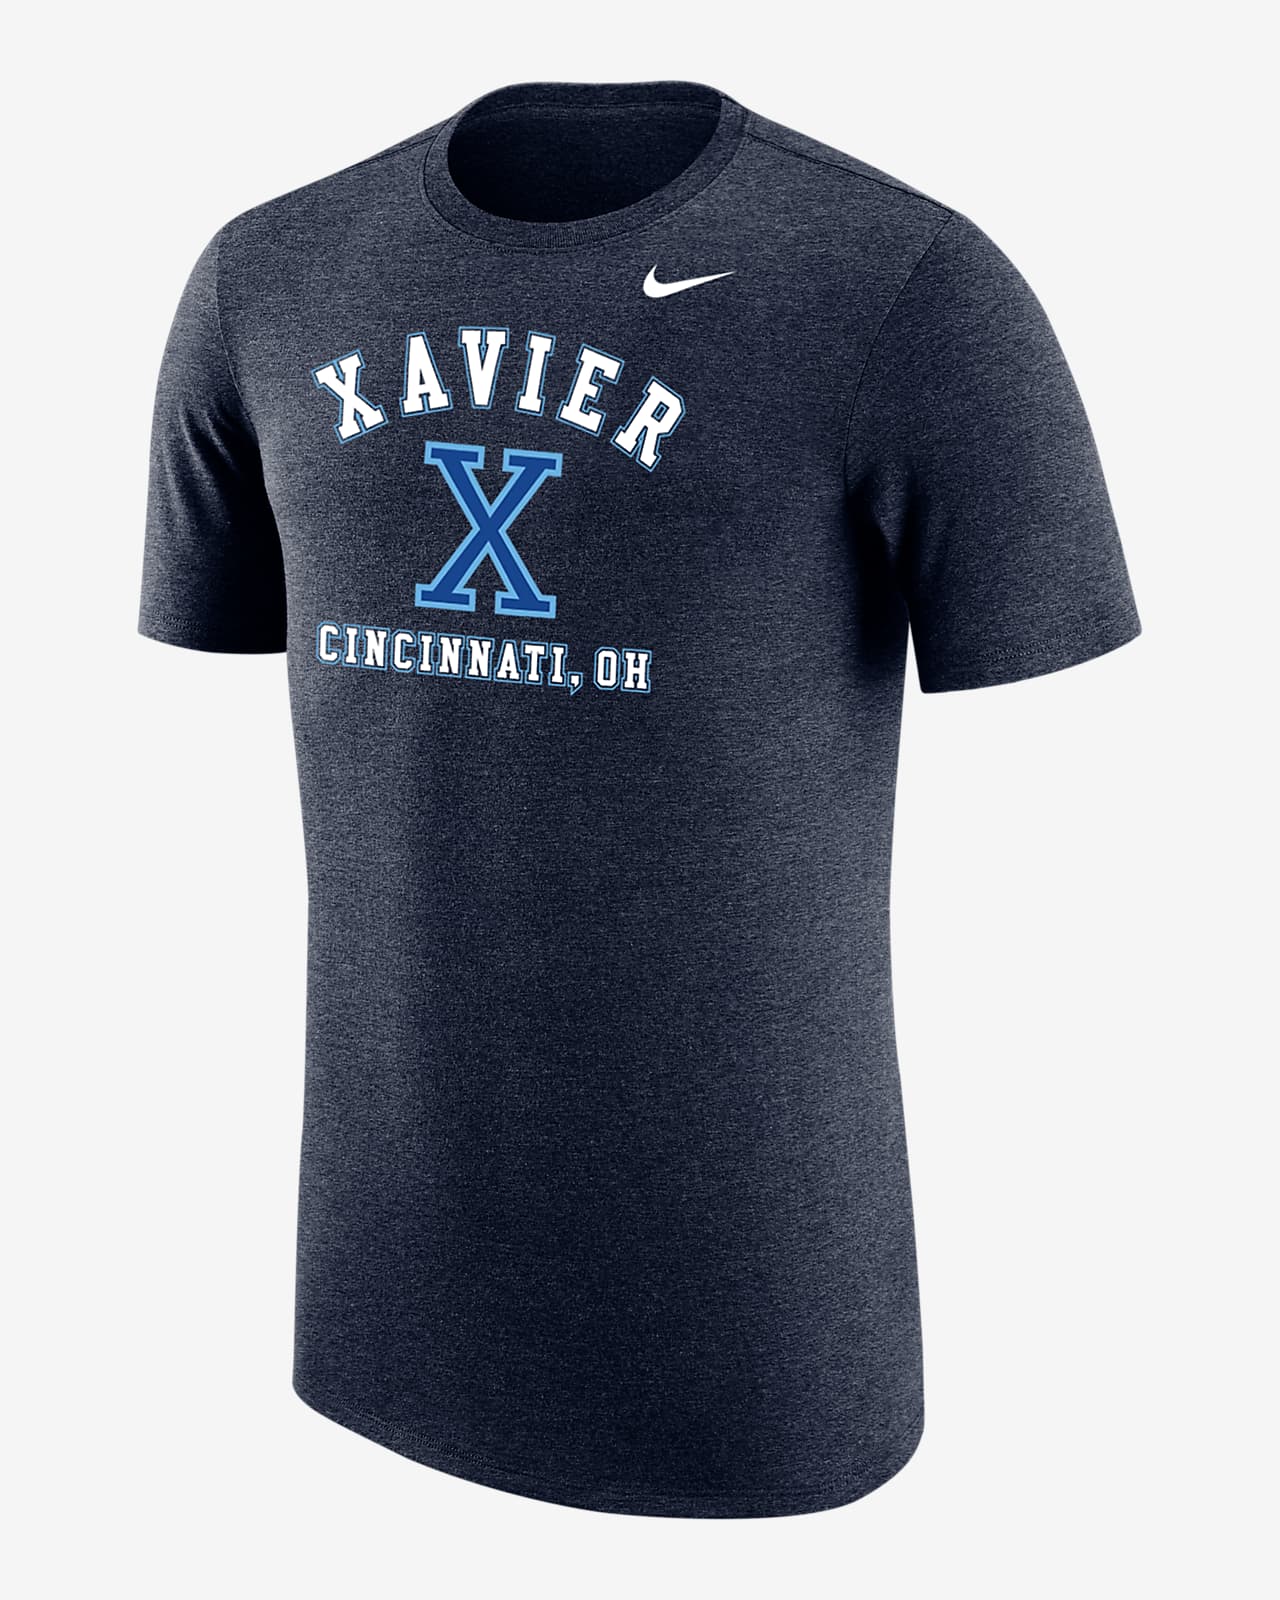 Playera universitaria Nike para hombre Xavier